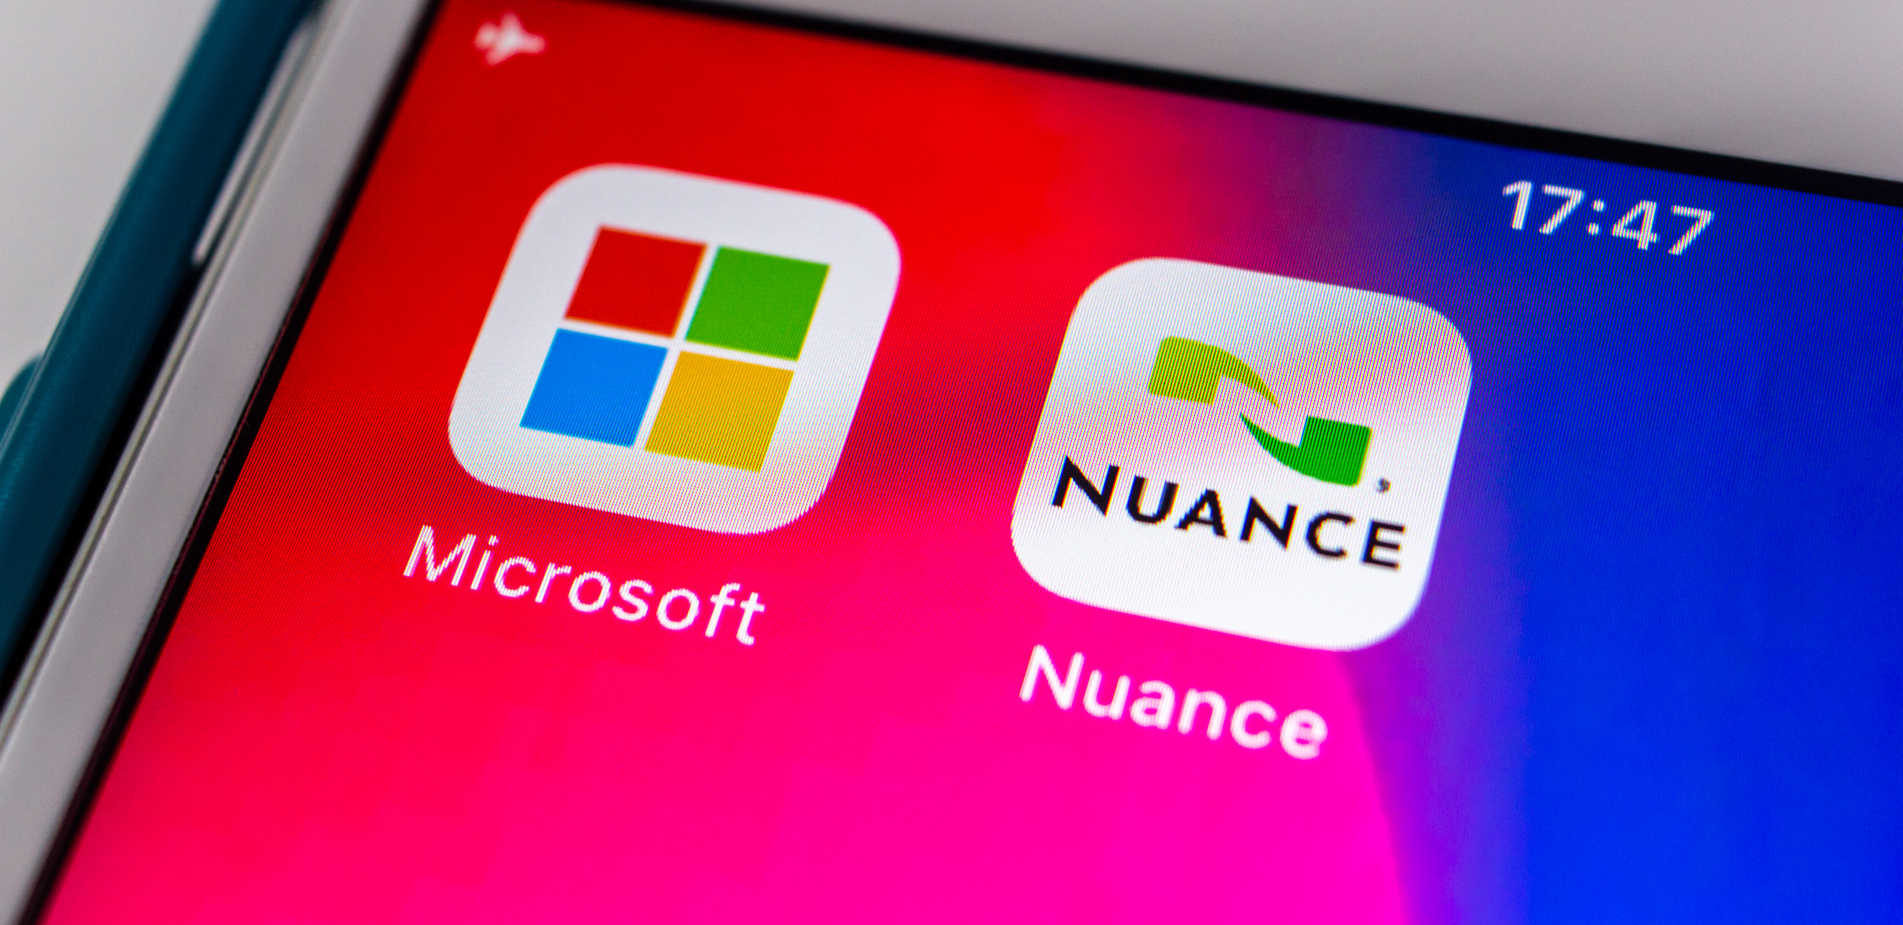 Nuance: Ποια είναι η εταιρία που αγόρασε η Microsoft έναντι 19,7 δισ. δολαρίων